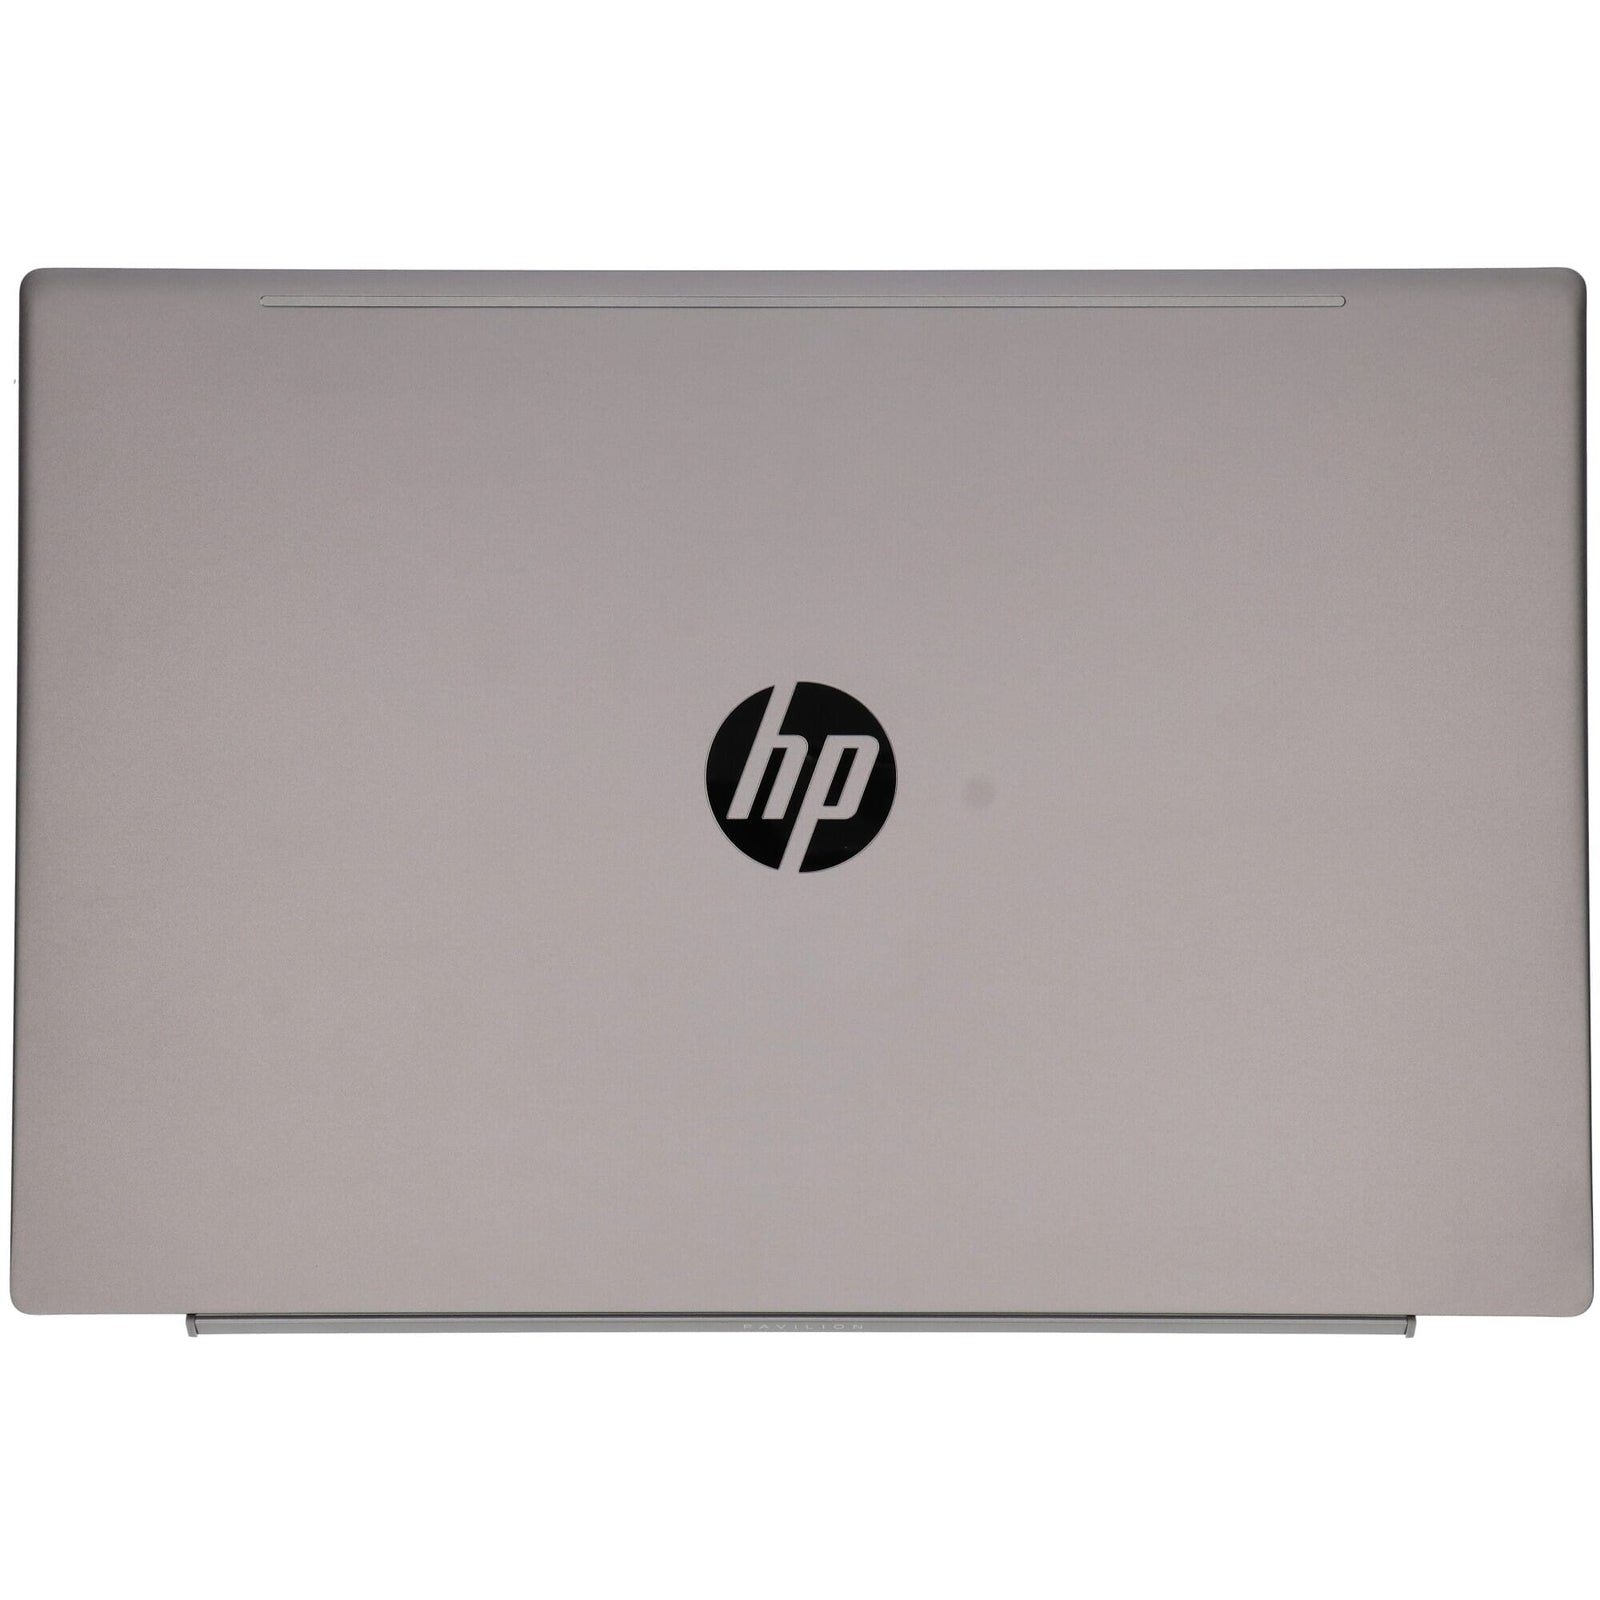 HP Laptop LCD Back Cover Zilver 220 250nits Modellen